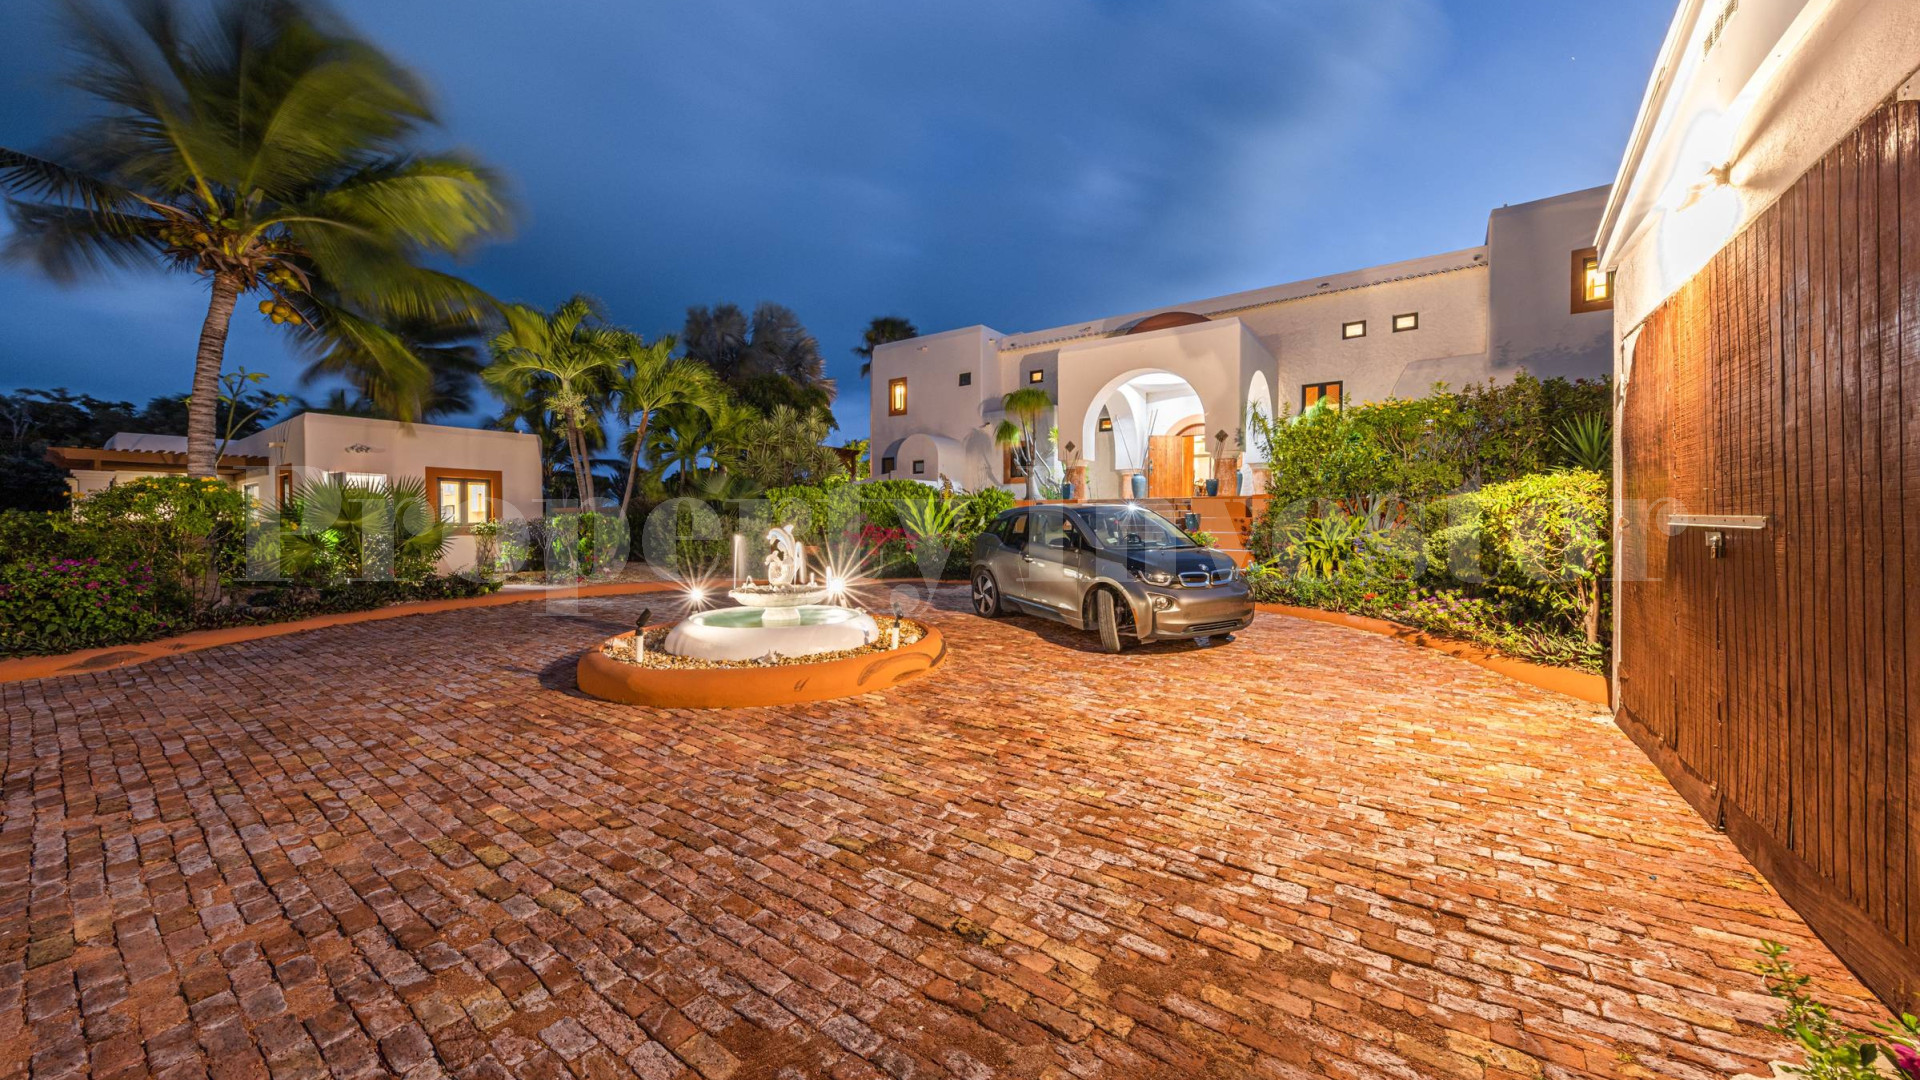 Exceptional 7 Bedroom Luxury Moroccan Style Beachfront Villa for Sale on Sapodilla Bay Beach, Turks & Caicos